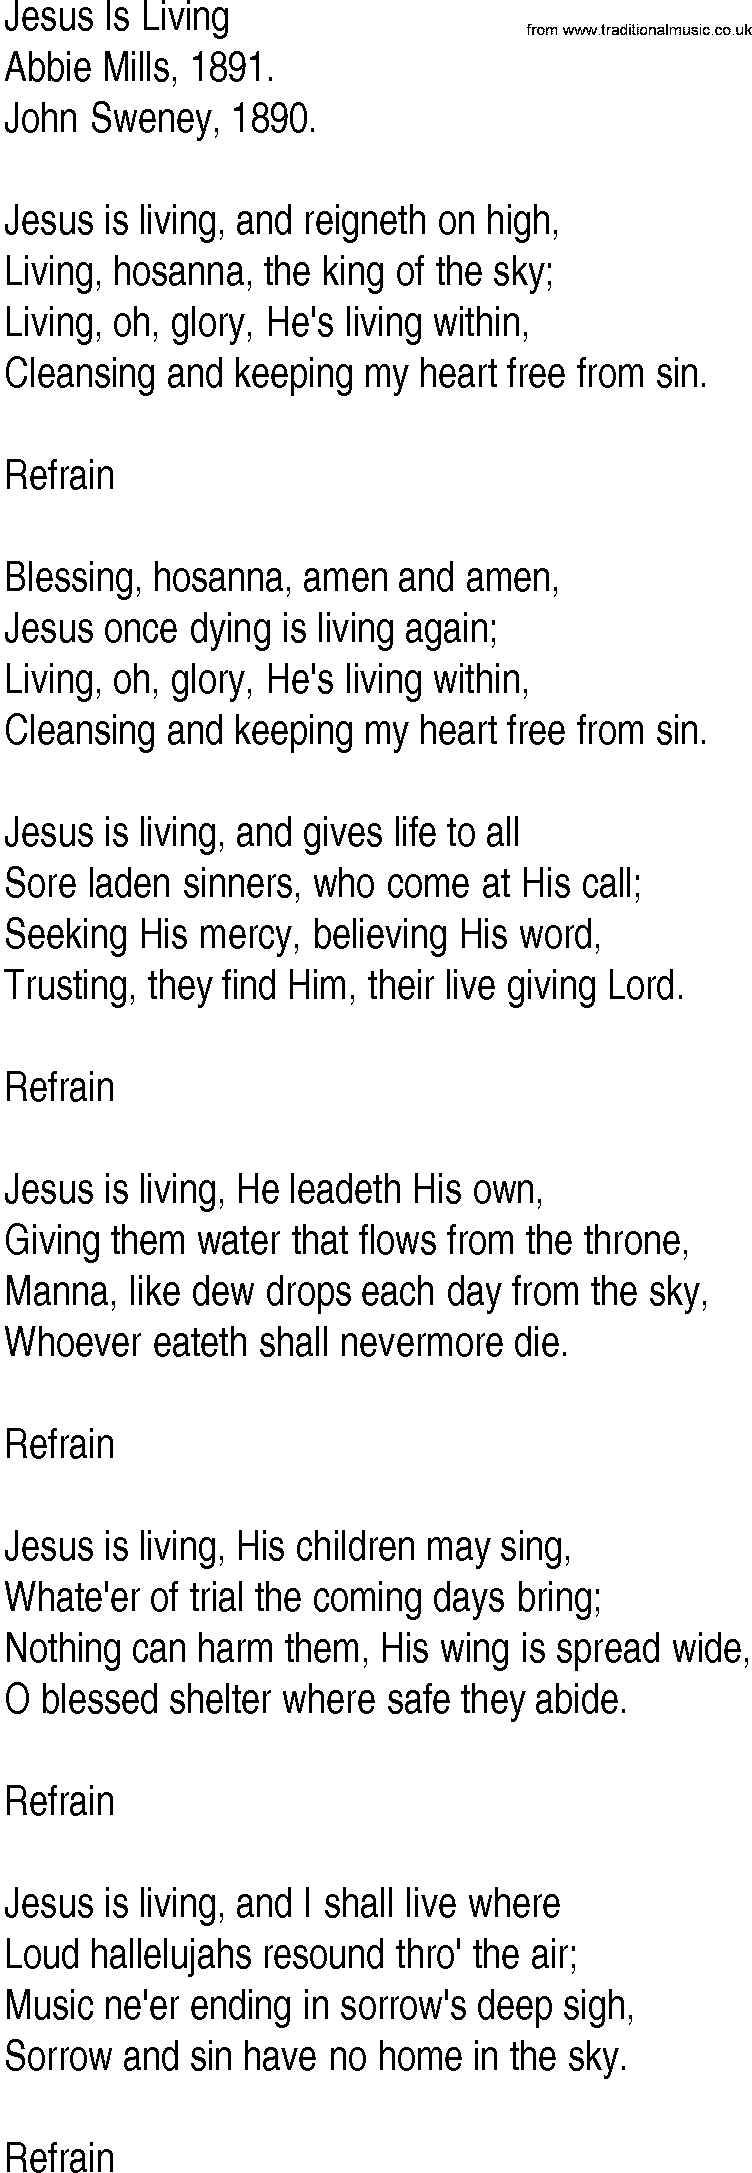 Hymn and Gospel Song: Jesus Is Living by Abbie Mills lyrics